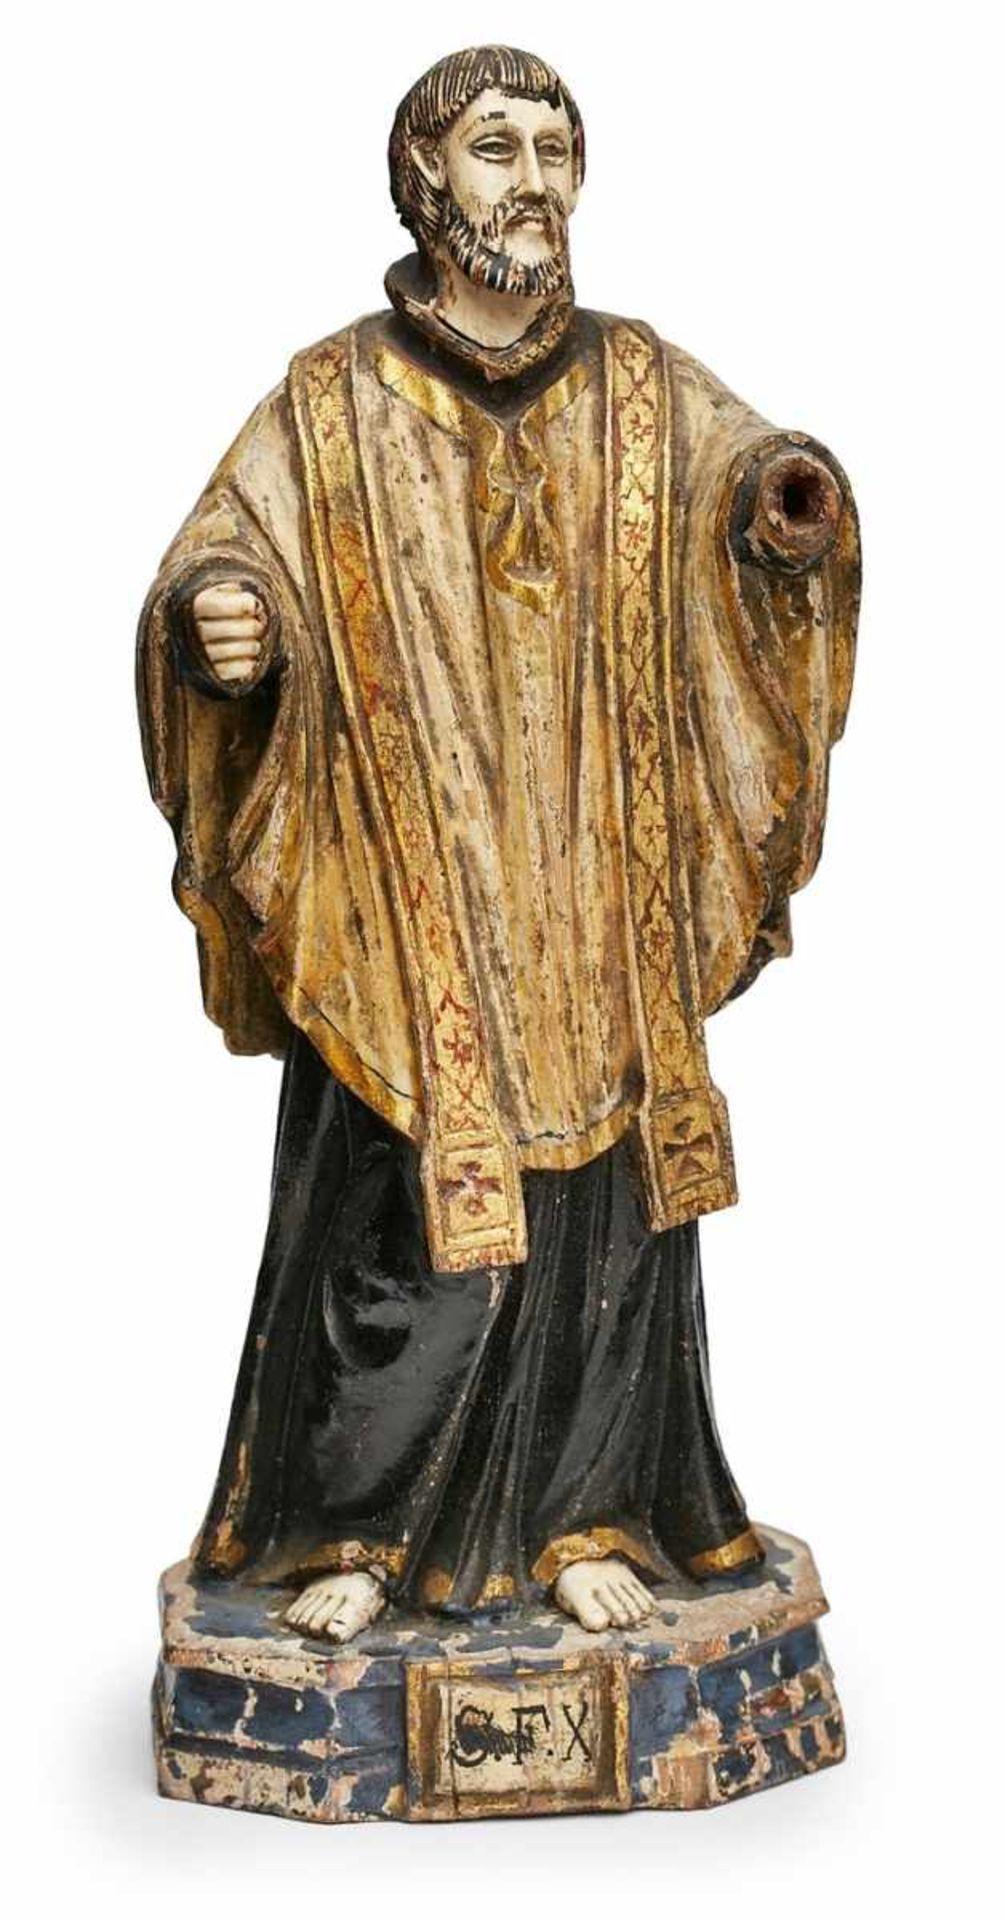 Kl. Figur "Heiliger", südländisch 19. Jh. Holz, vollrd. geschnitzt, farbig u. partiell gold